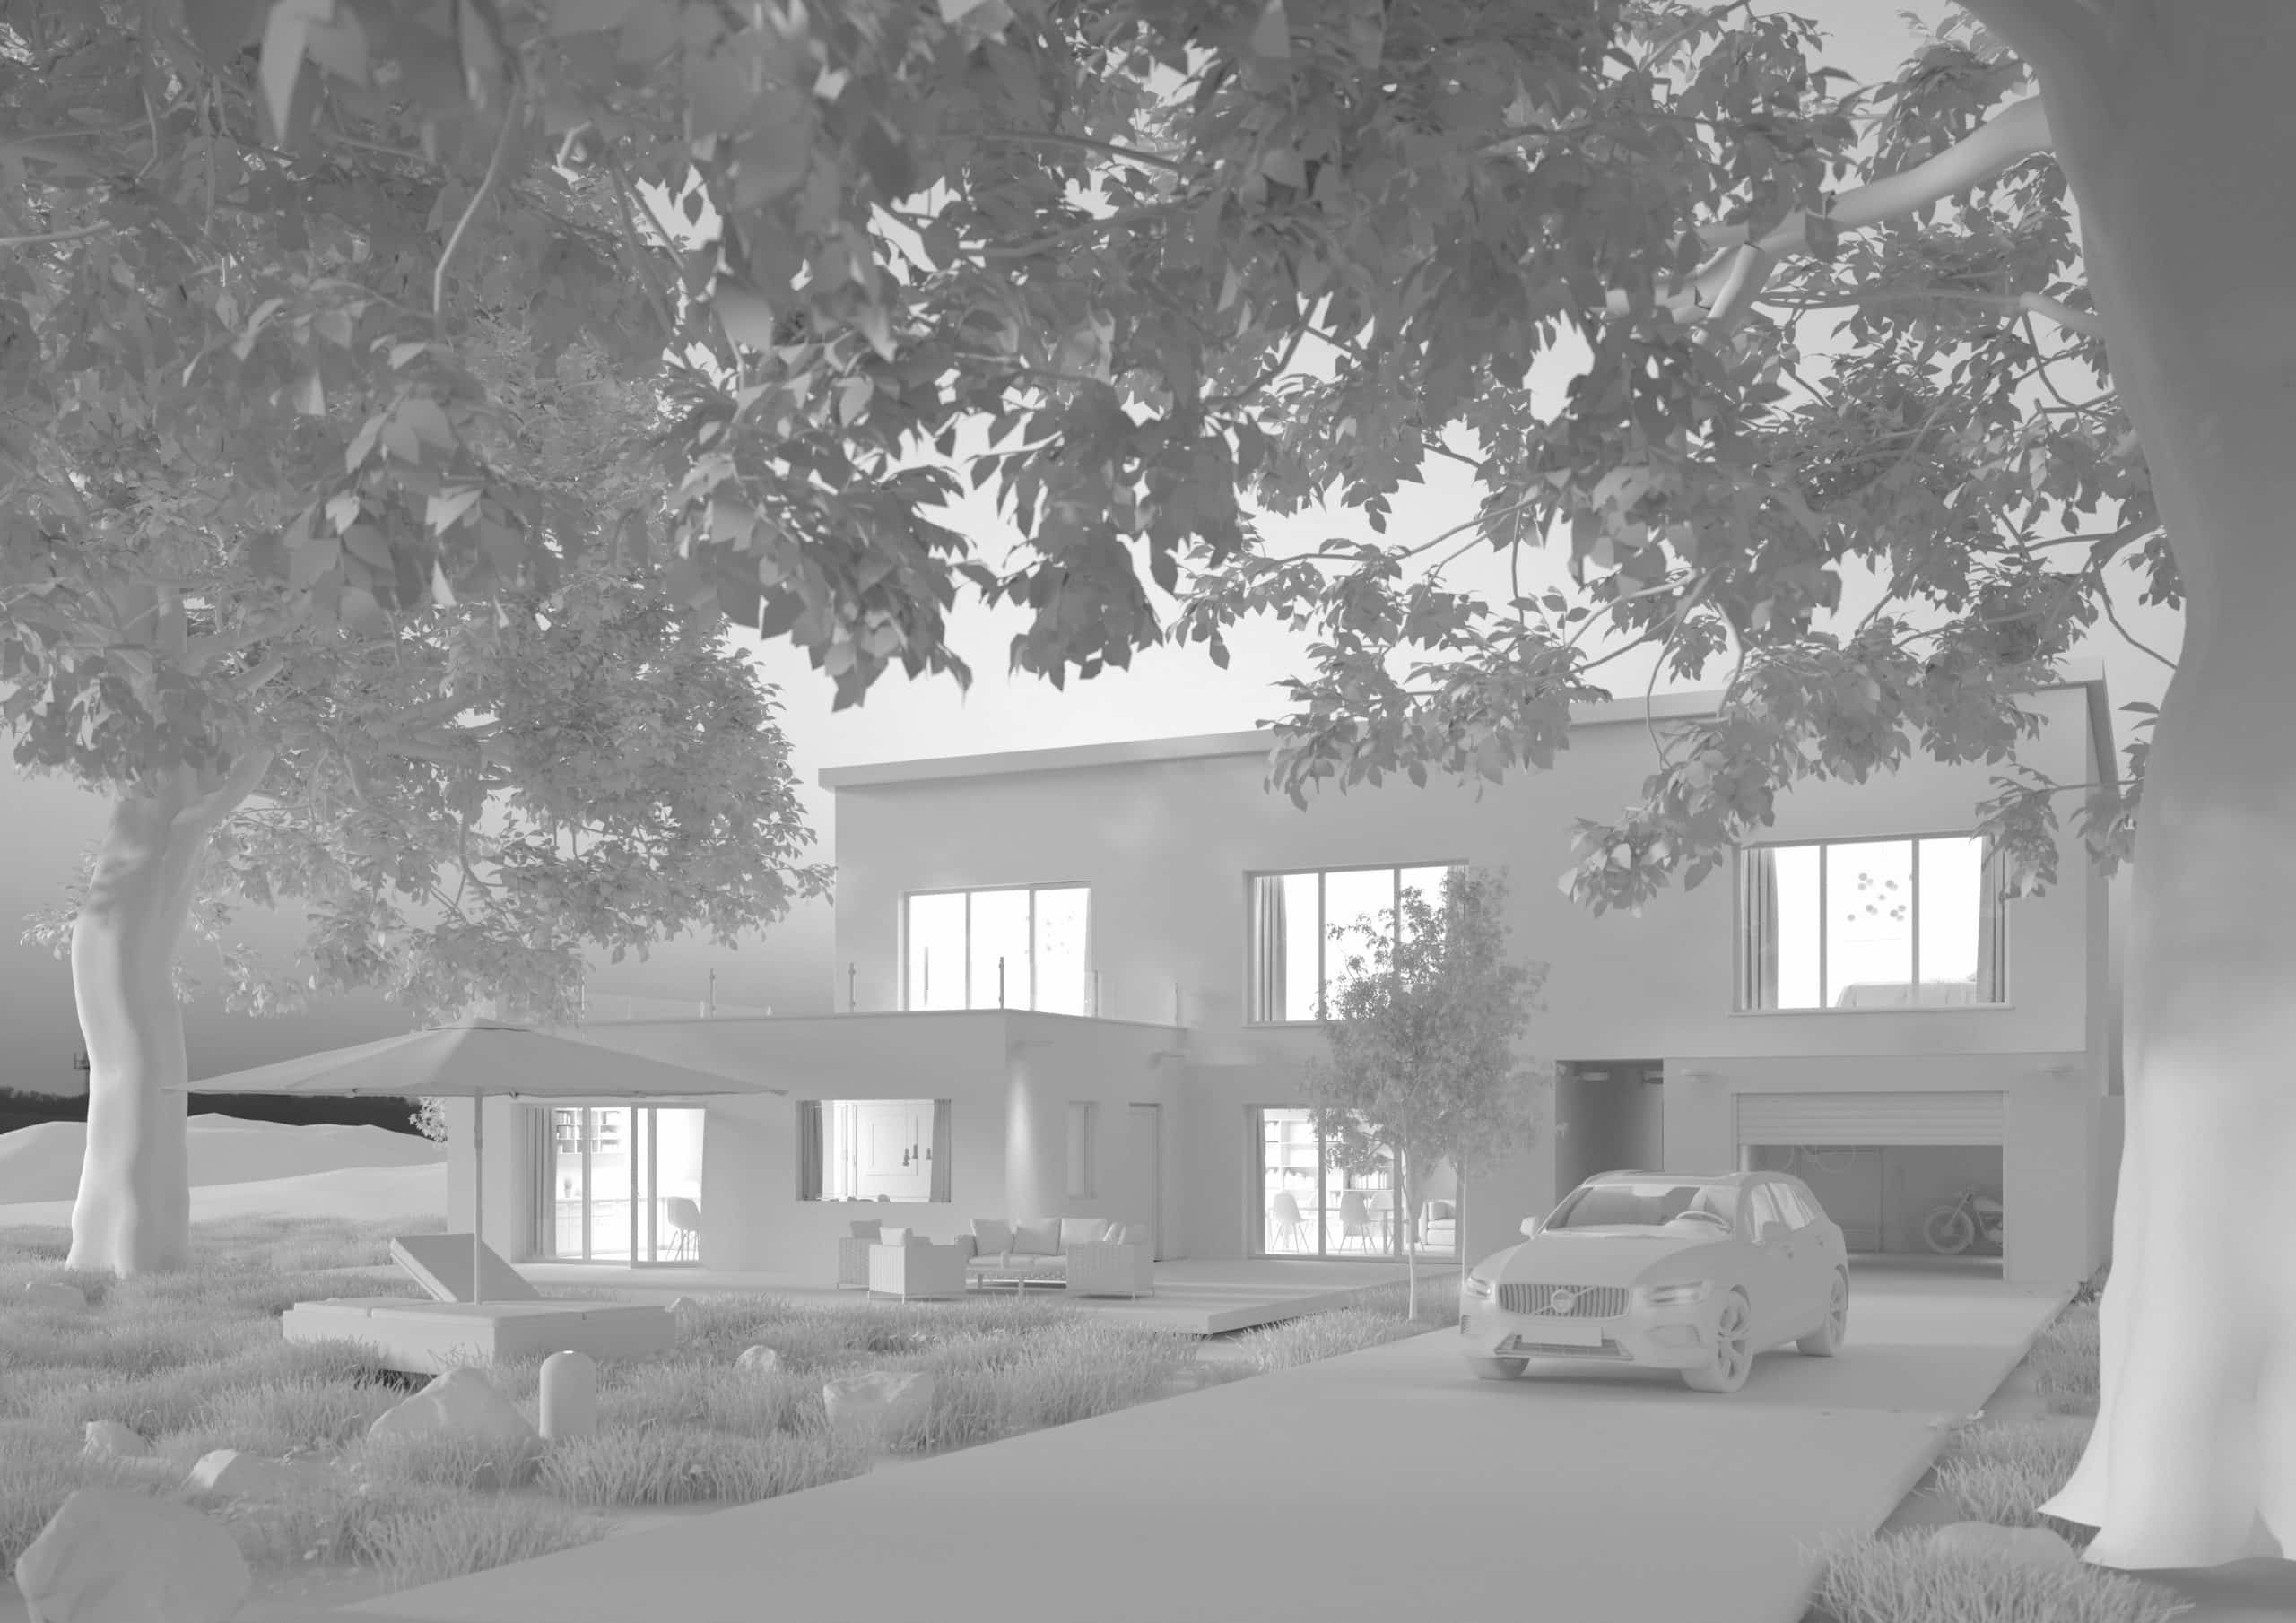 Unbearbeitete Ansicht | Land­haus | Architecture, 3D-Visualisierung, Automotive, Landscape | full CGI / 3D: Entwurf, Modelling, Lightning, Shading, Rendering